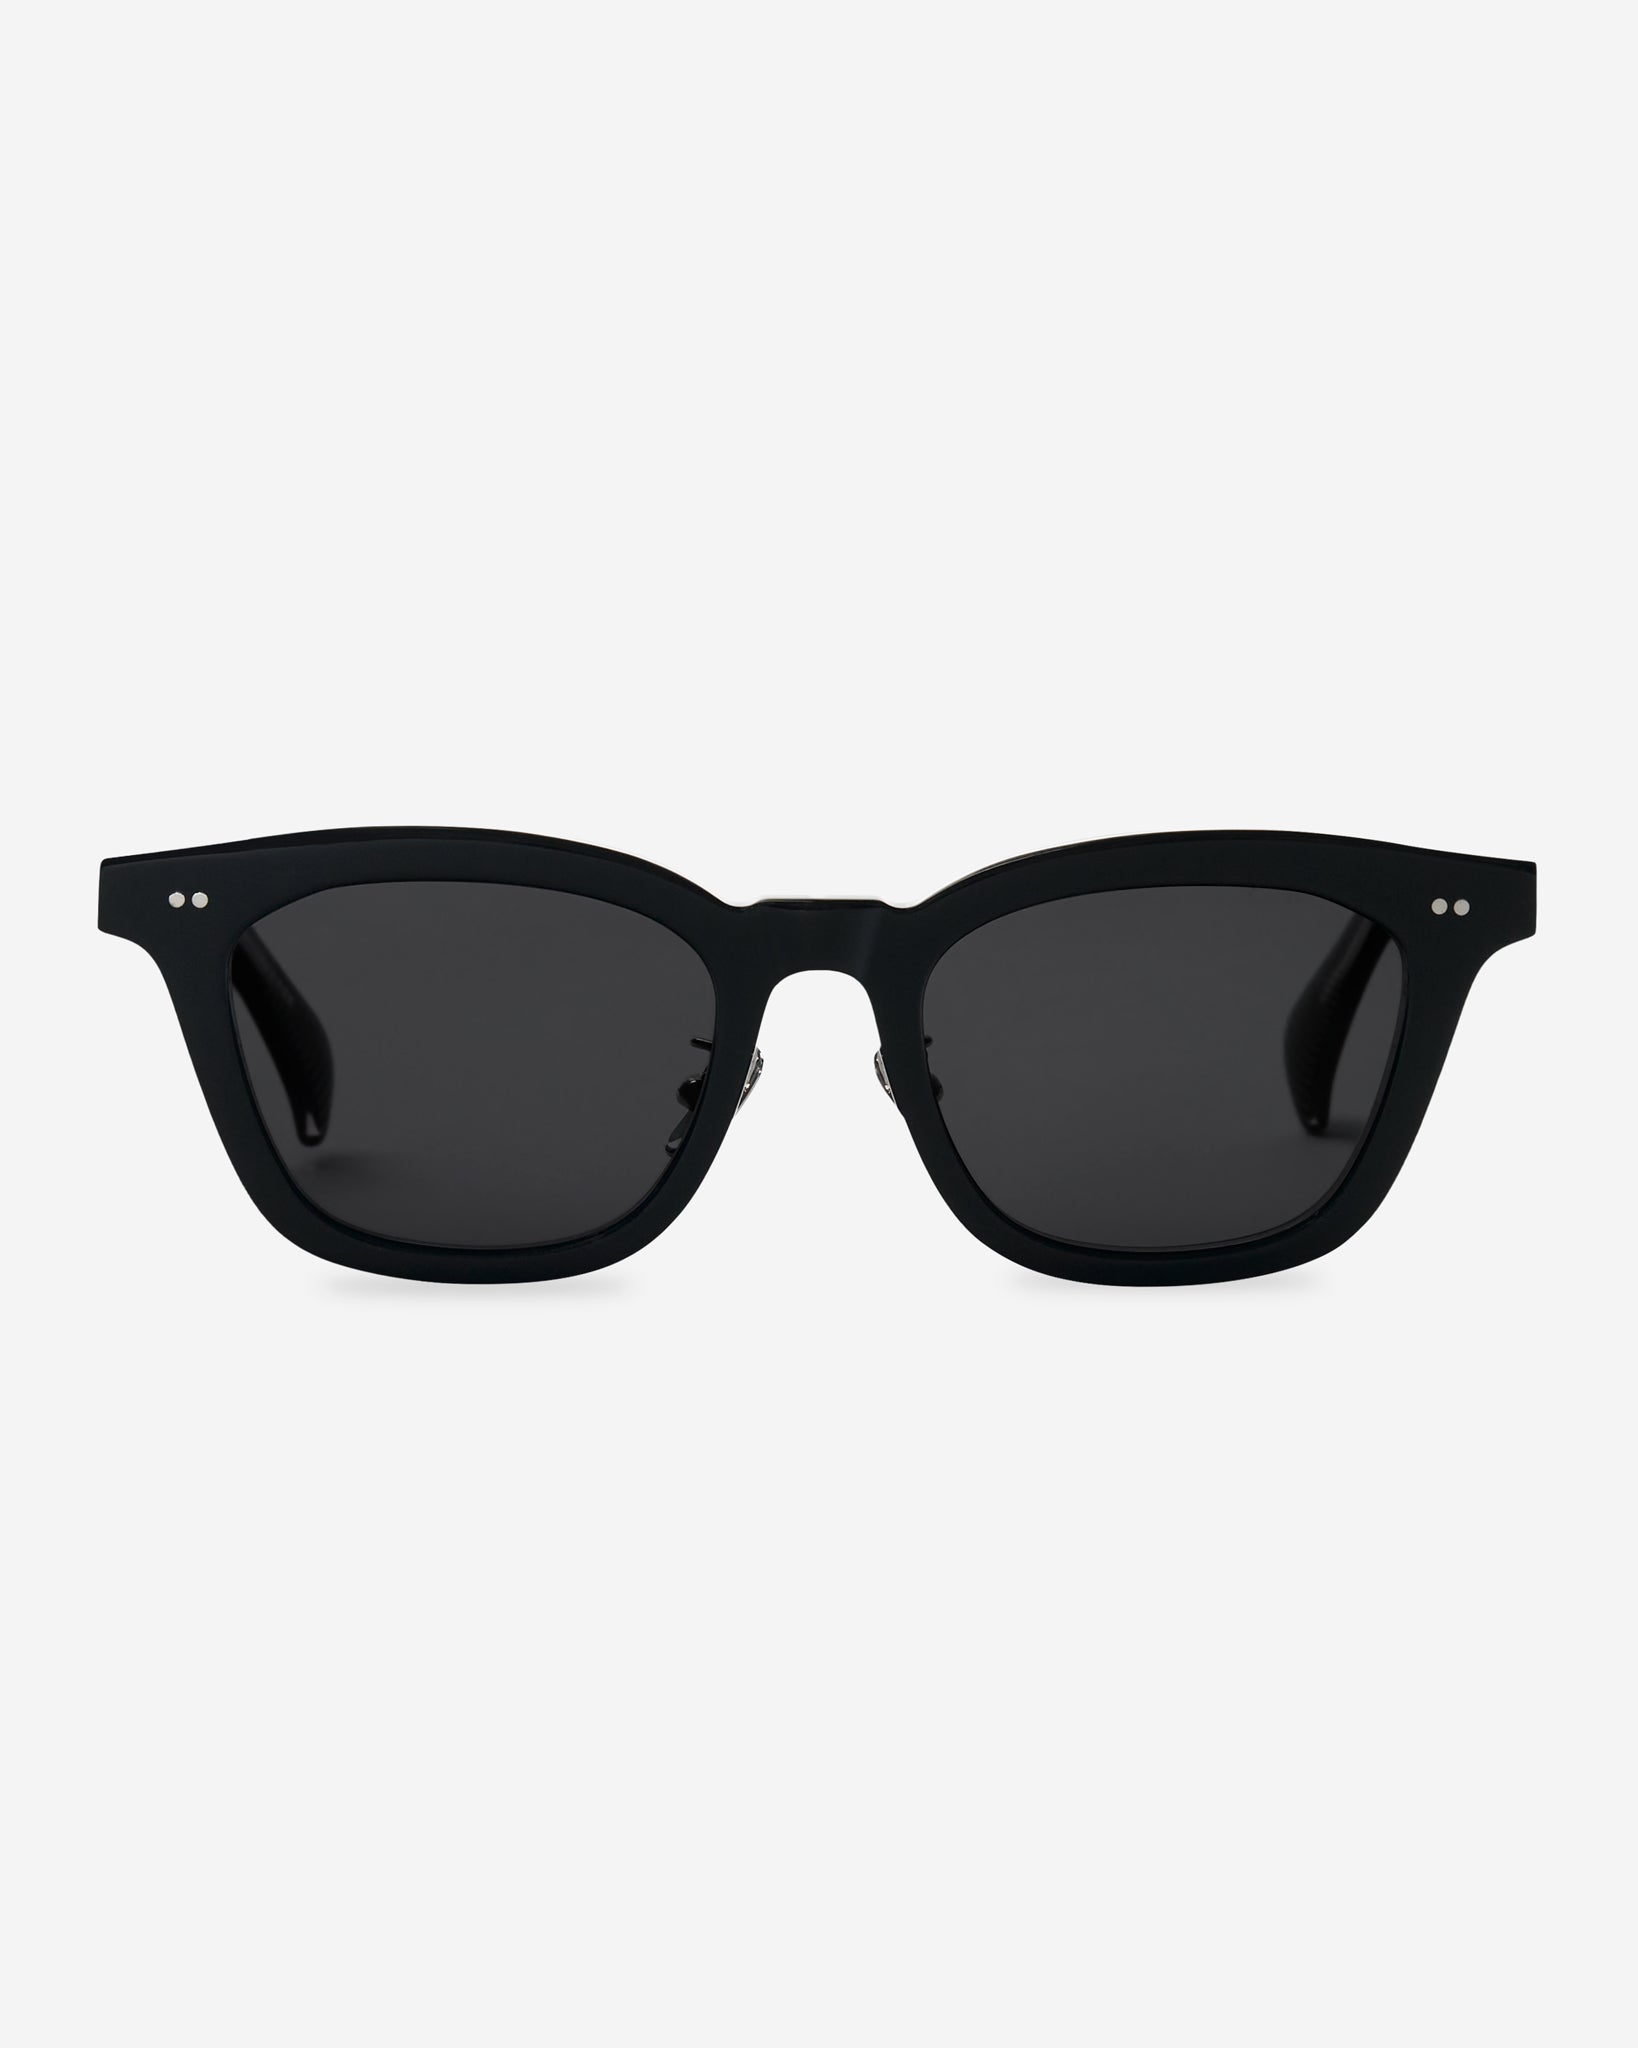 Koya Sunglasses - Black